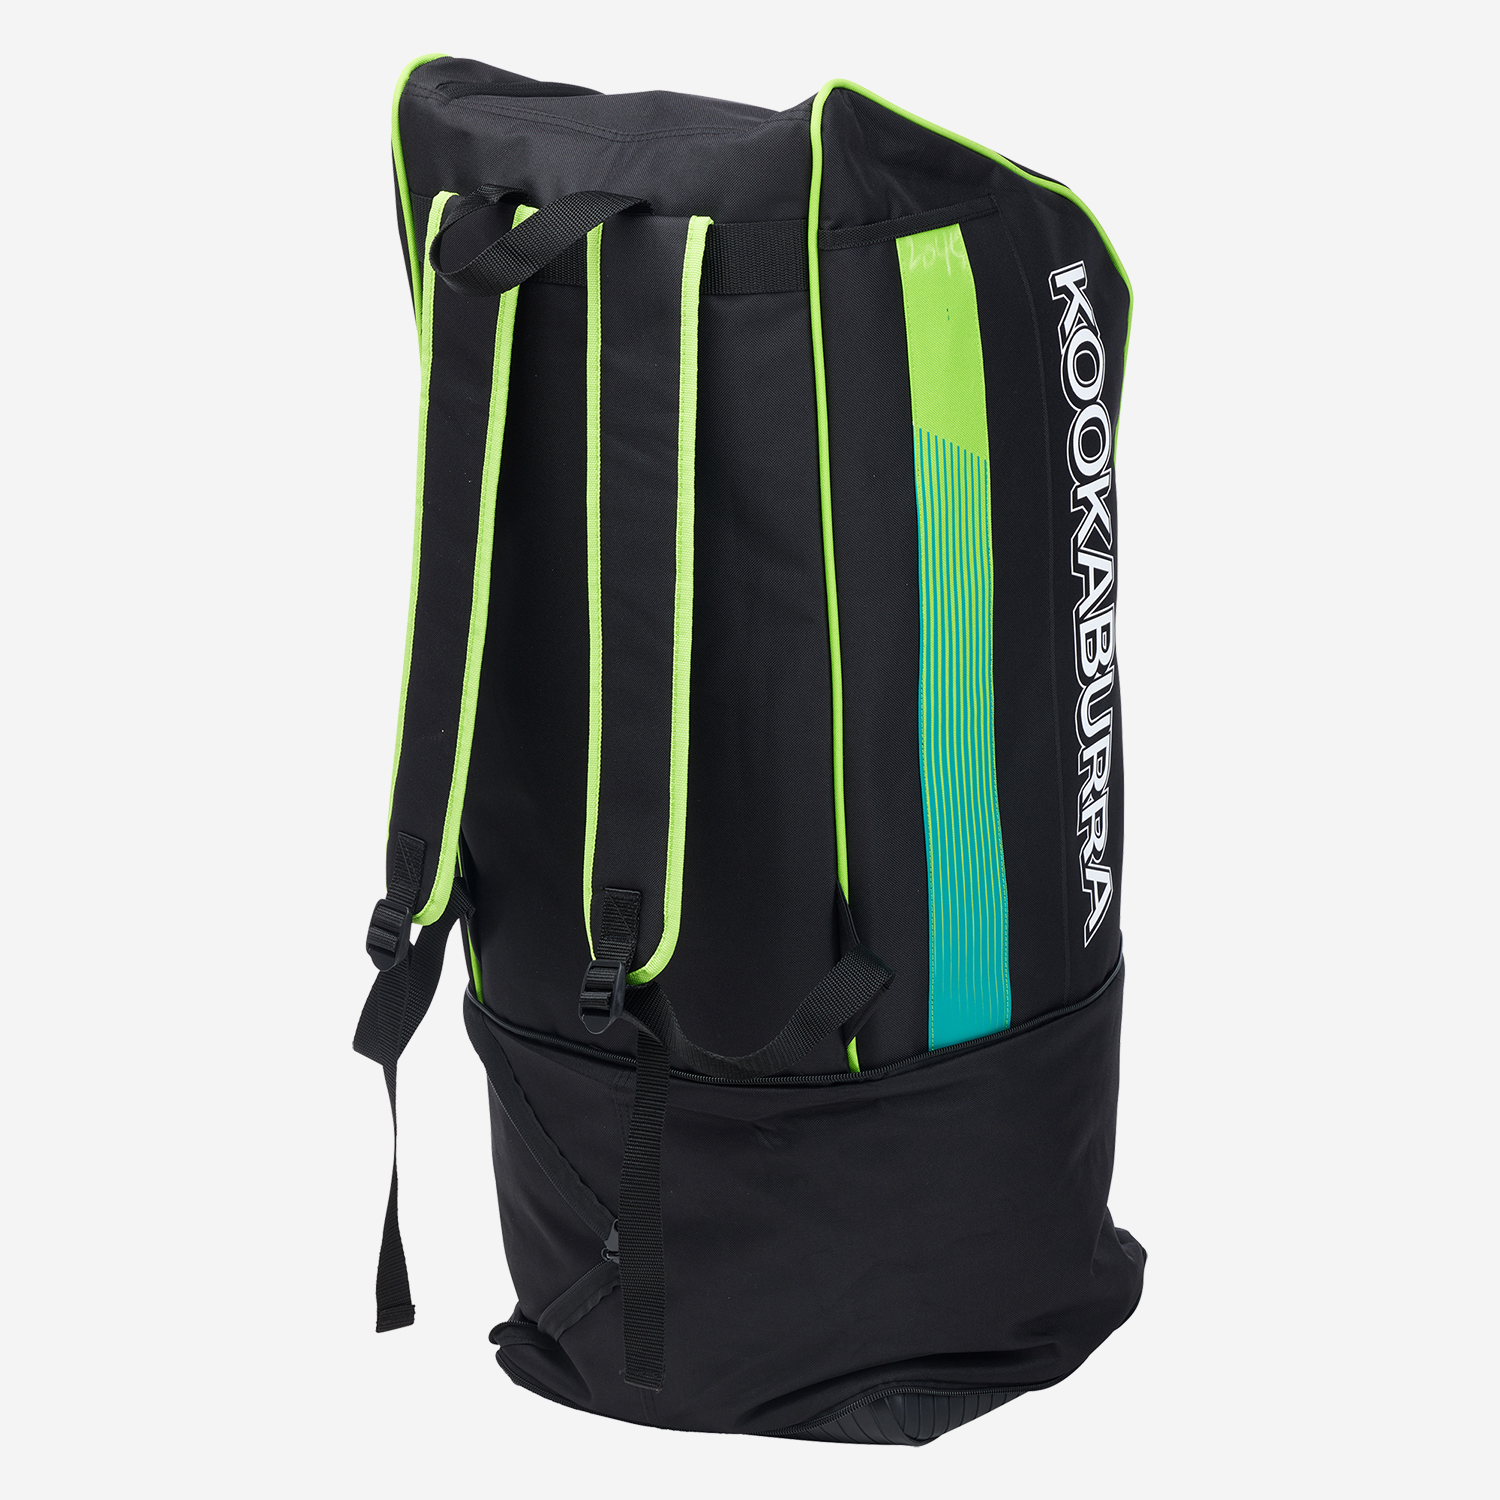 Pro 3.0 Duffle Cricket Bag